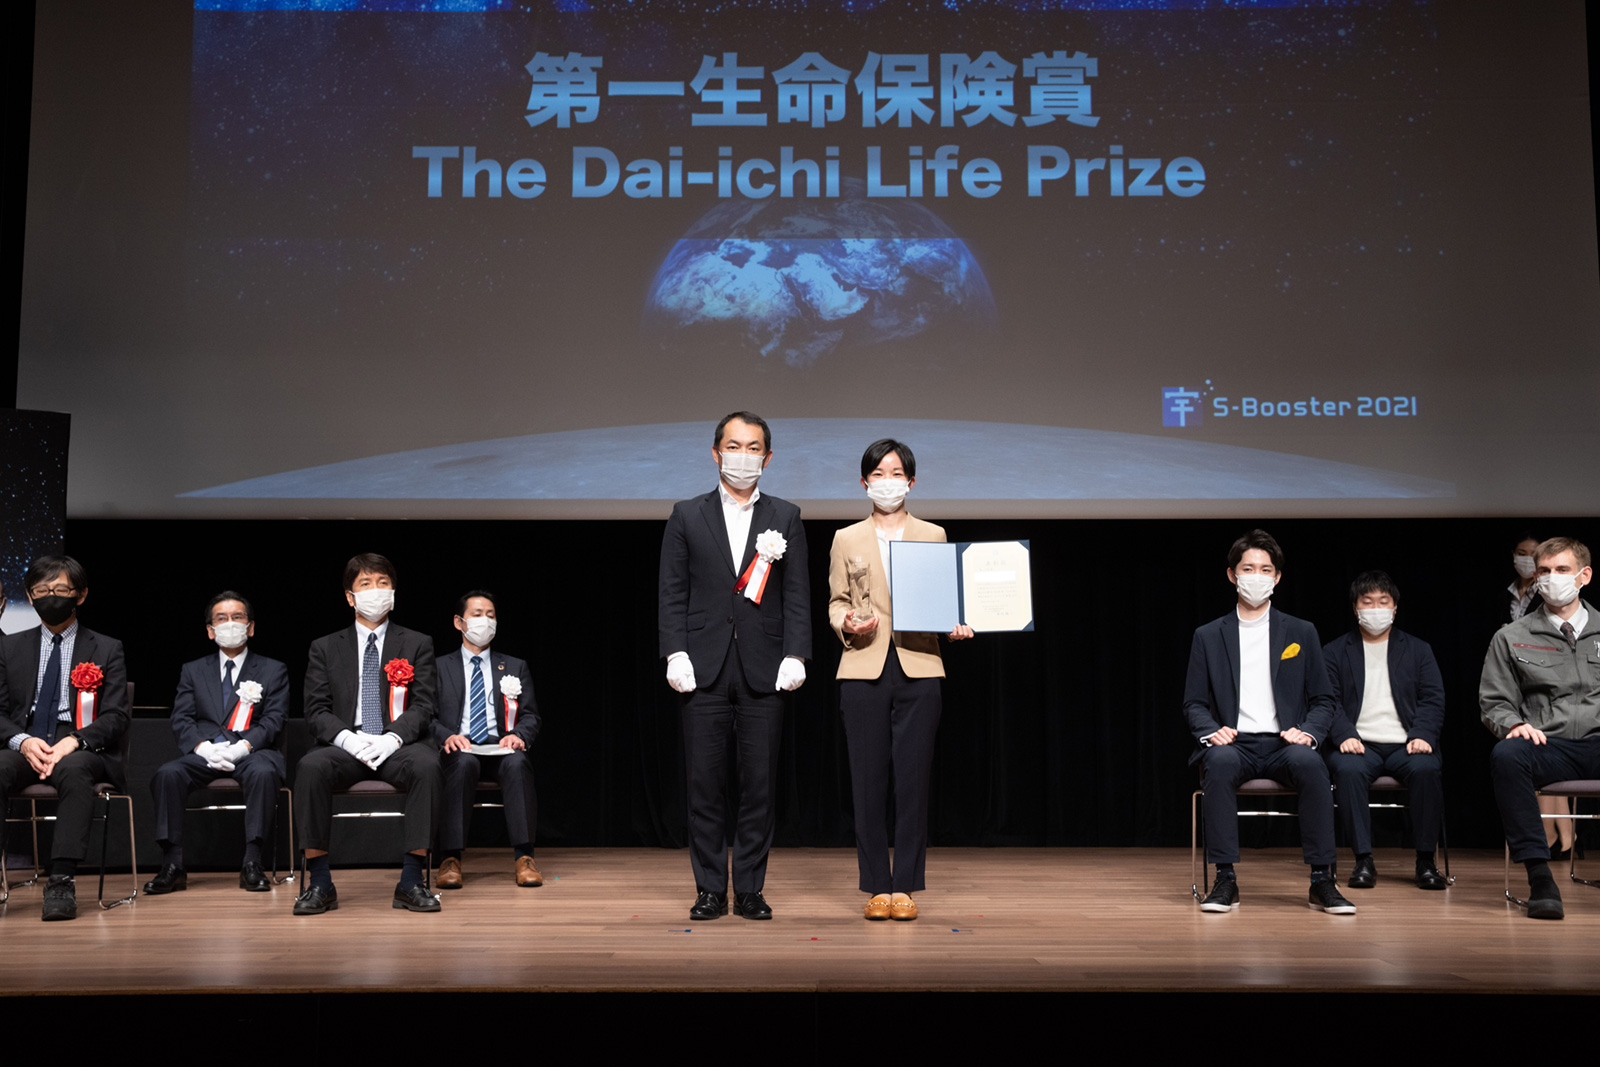 The Dai-ichi Life Prize